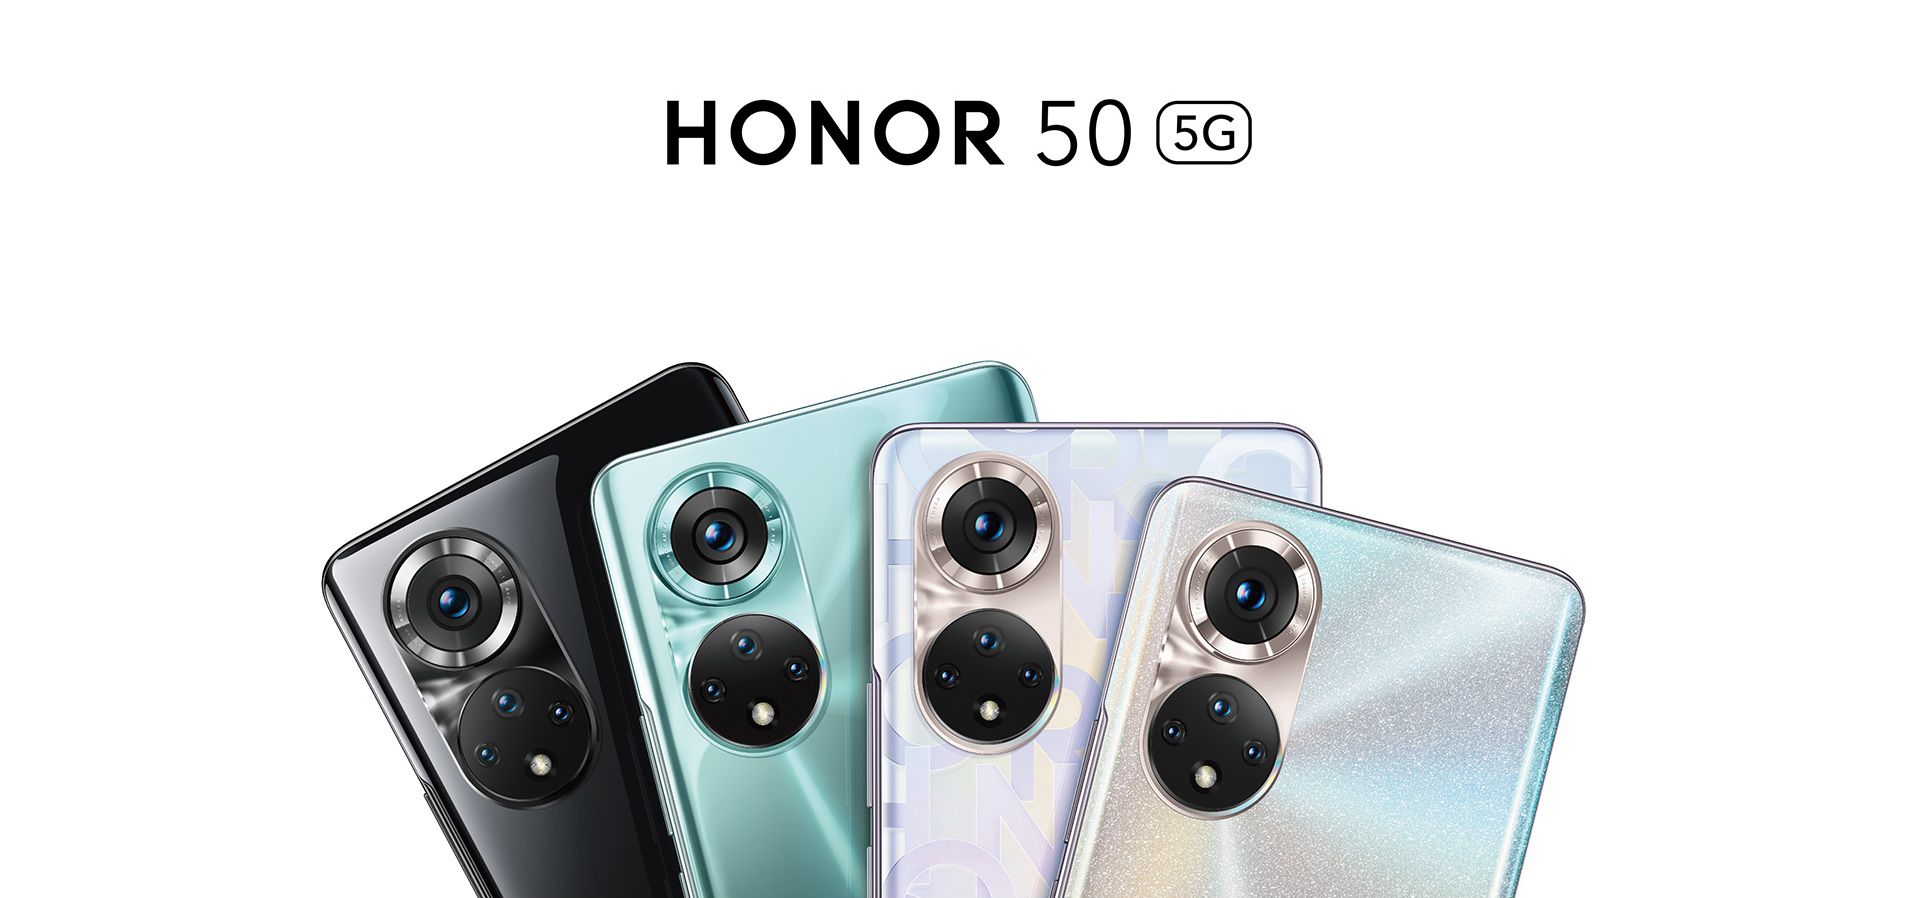 HONOR 50 5G:Wonder in One Take